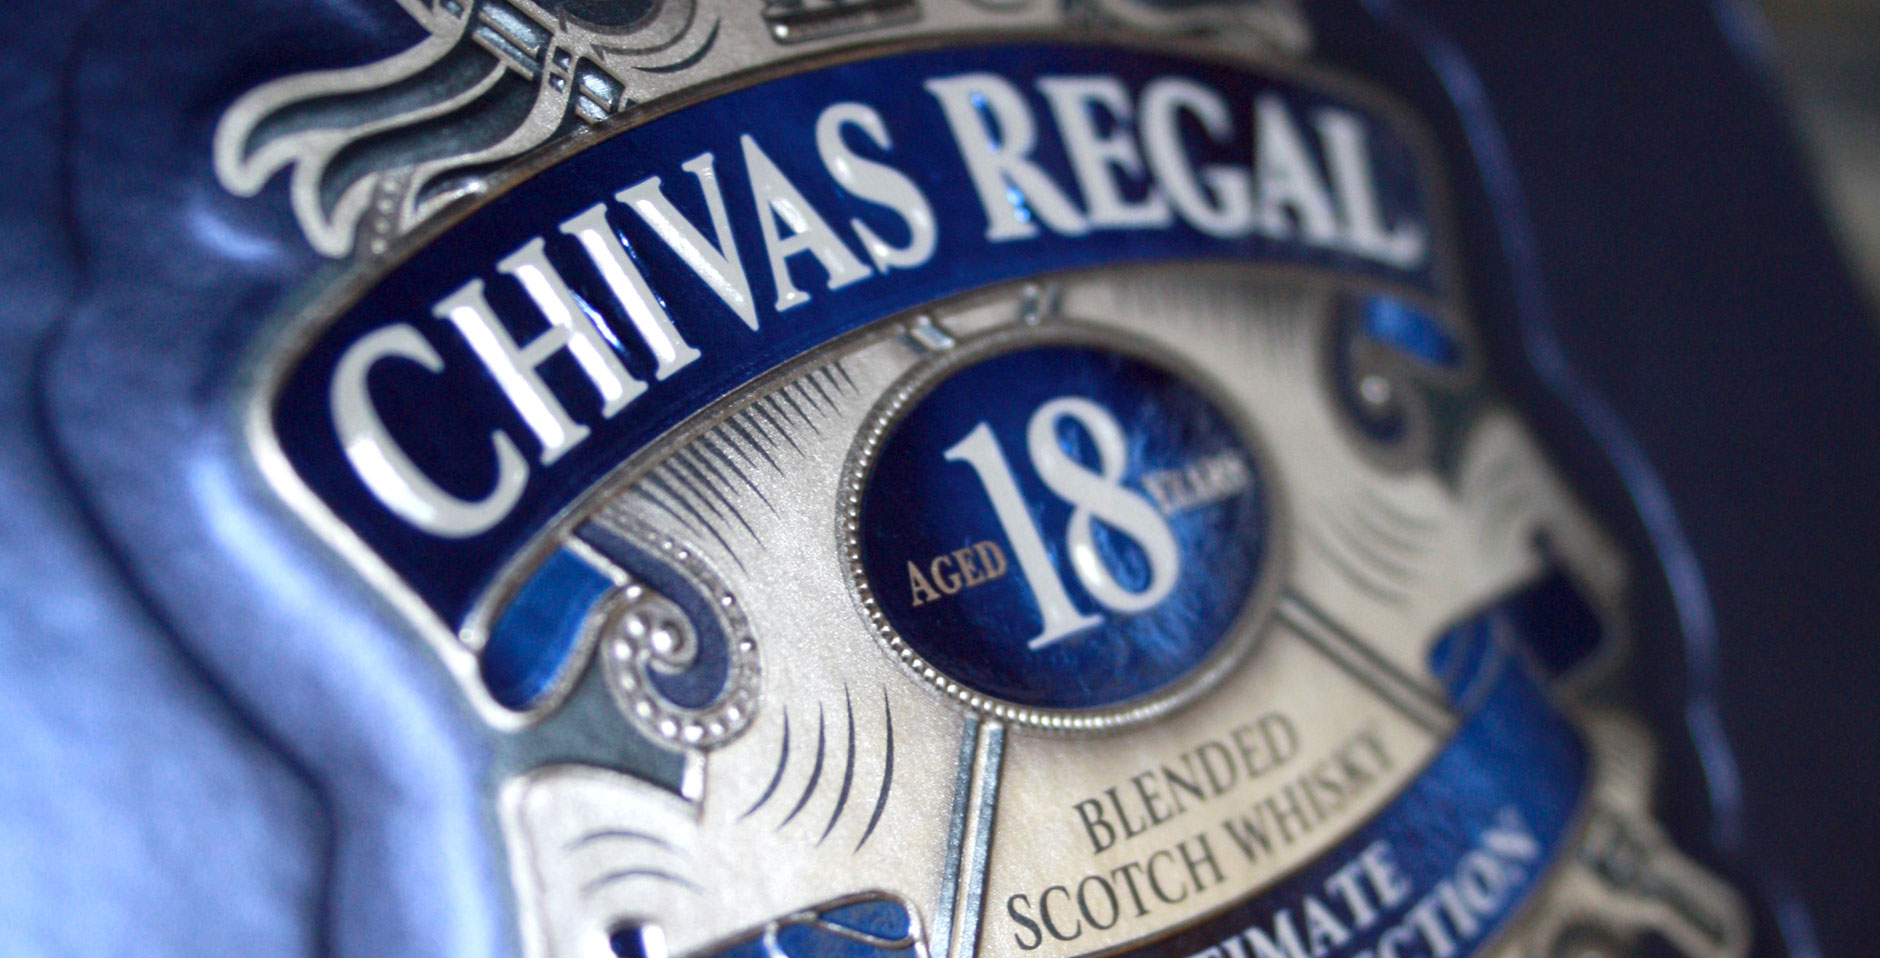 Chivas Regal Box Detail